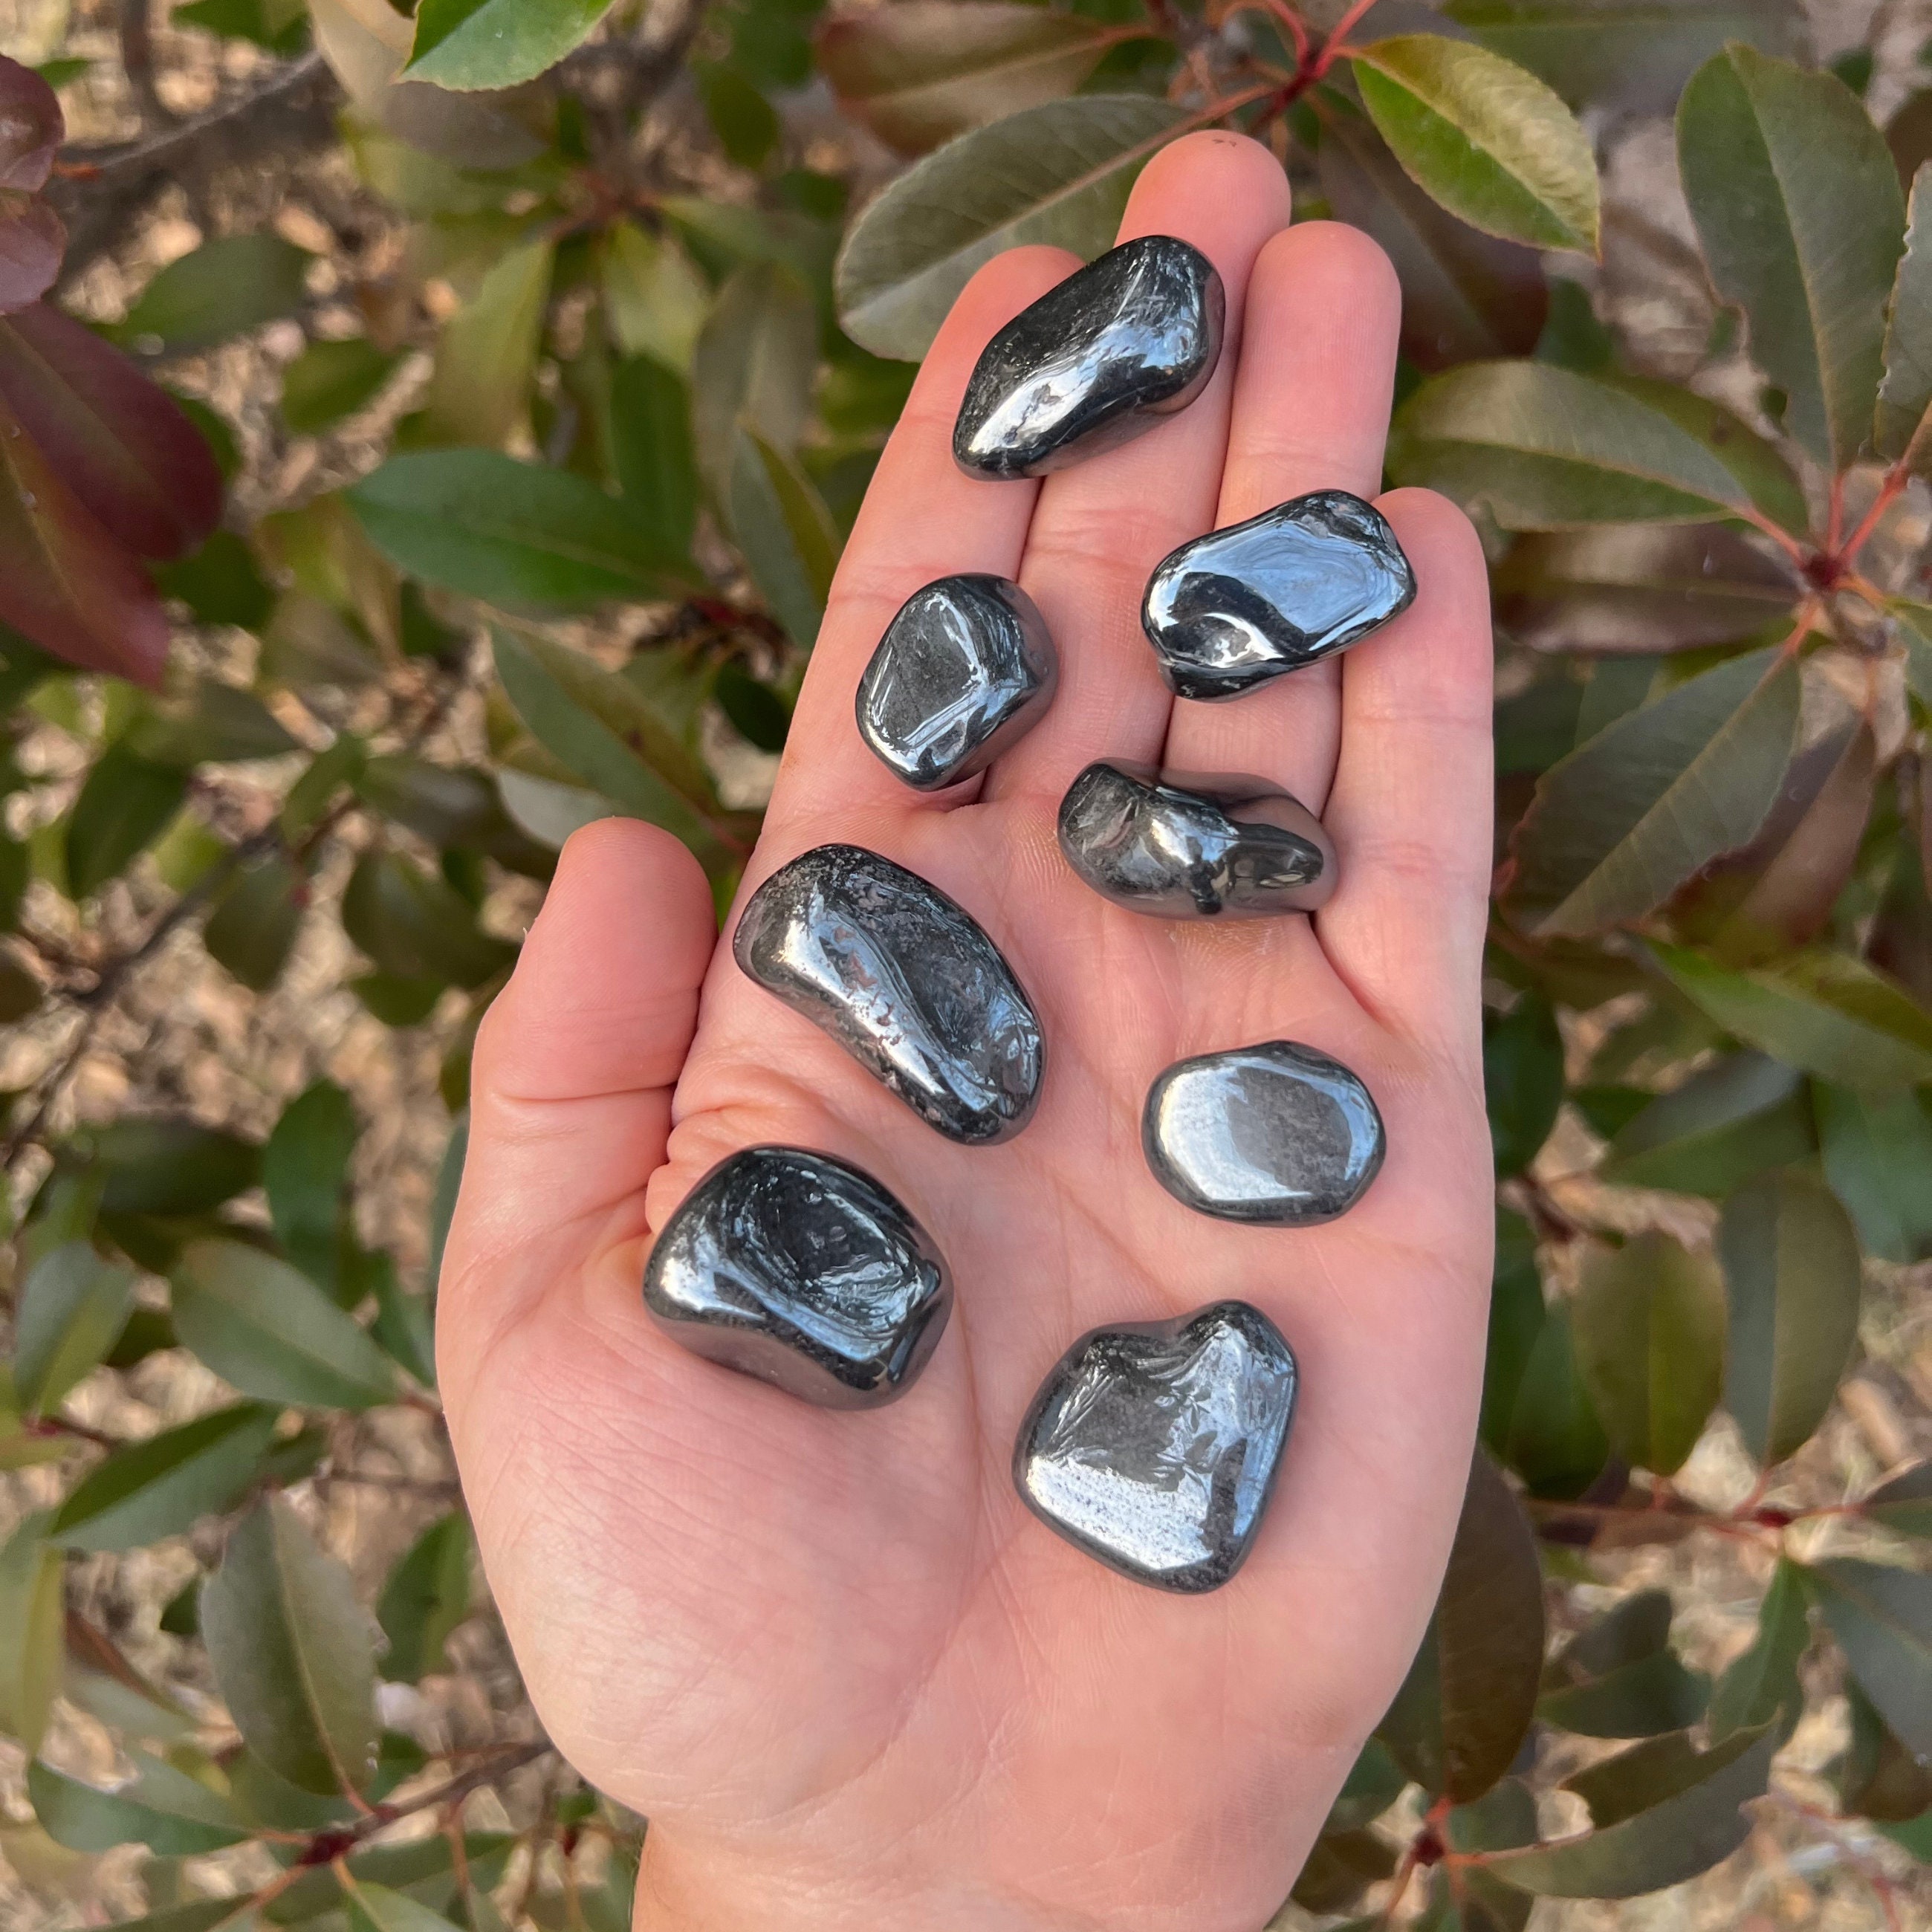 Hematite Stones, Shop Healing Hematite Crystals & Gemstones